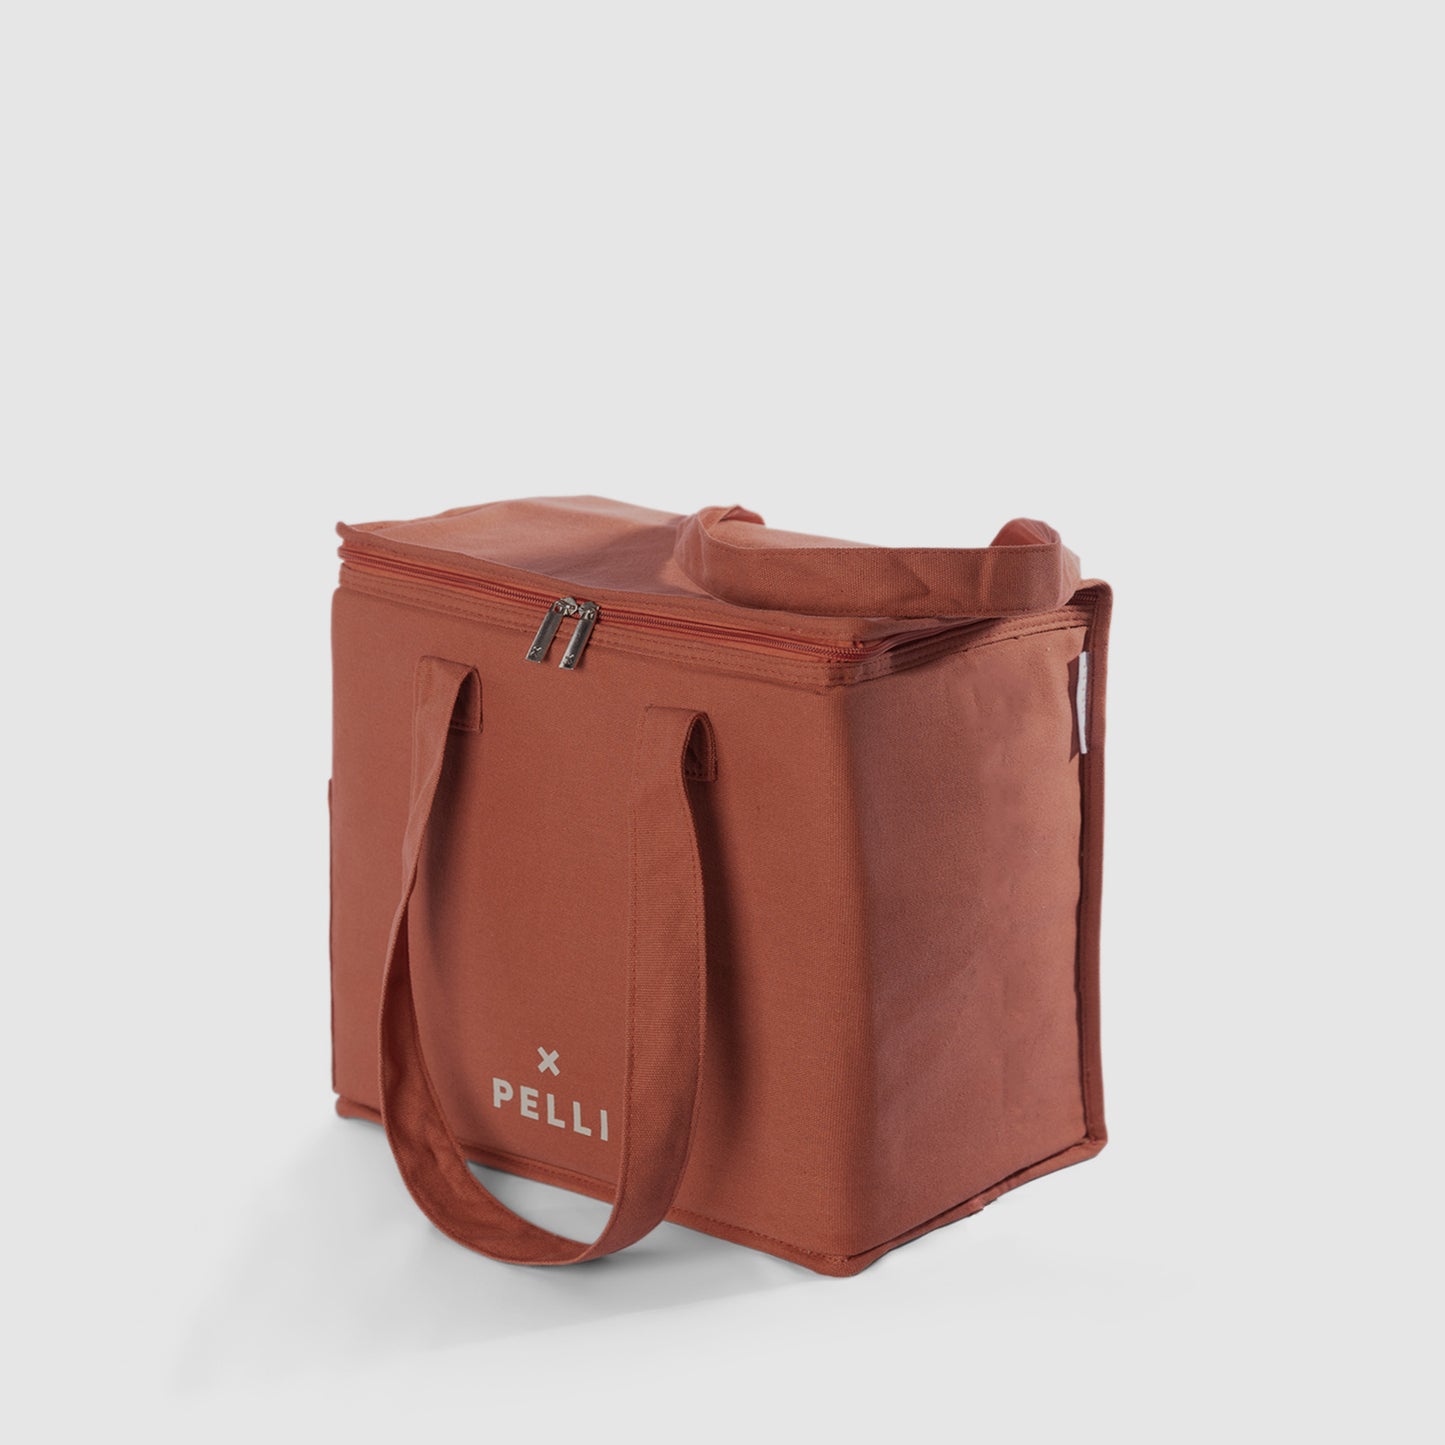 SECONDS 'OK Chill' - Medium Cooler Bag ${on sale}